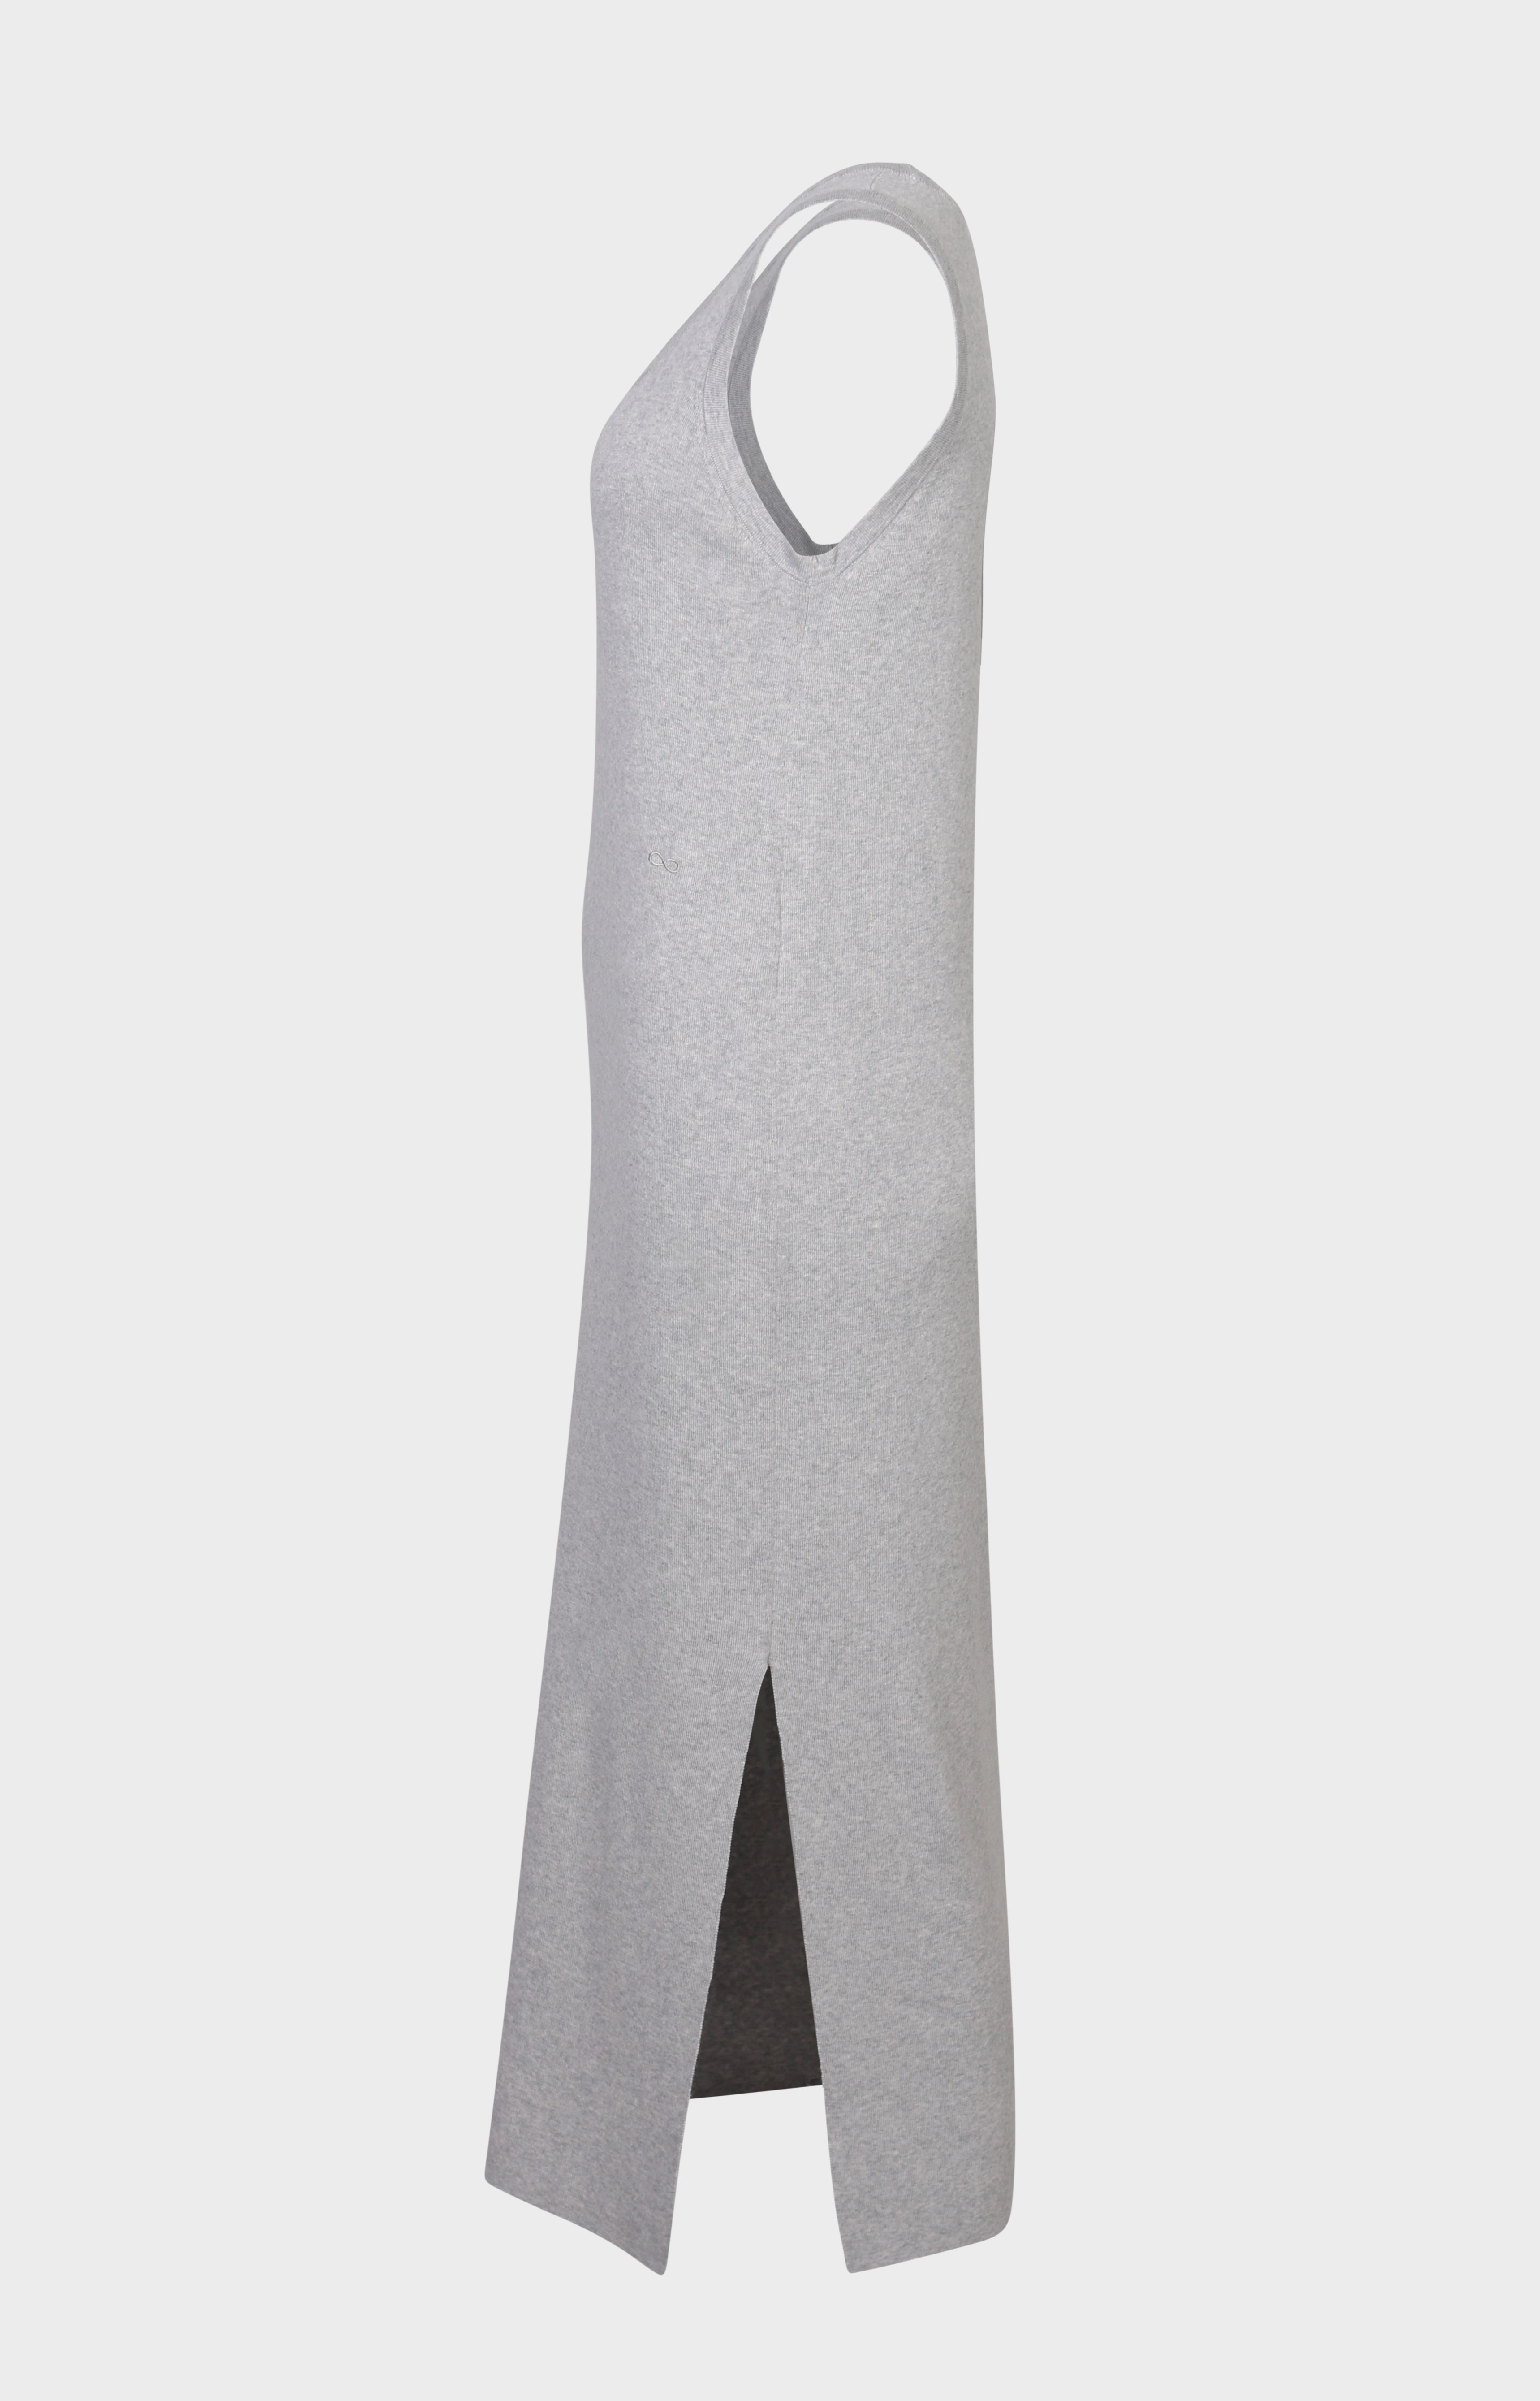 SMINFINITY Comfy Knit Maxi Tank Dress in Heather Grey M/L